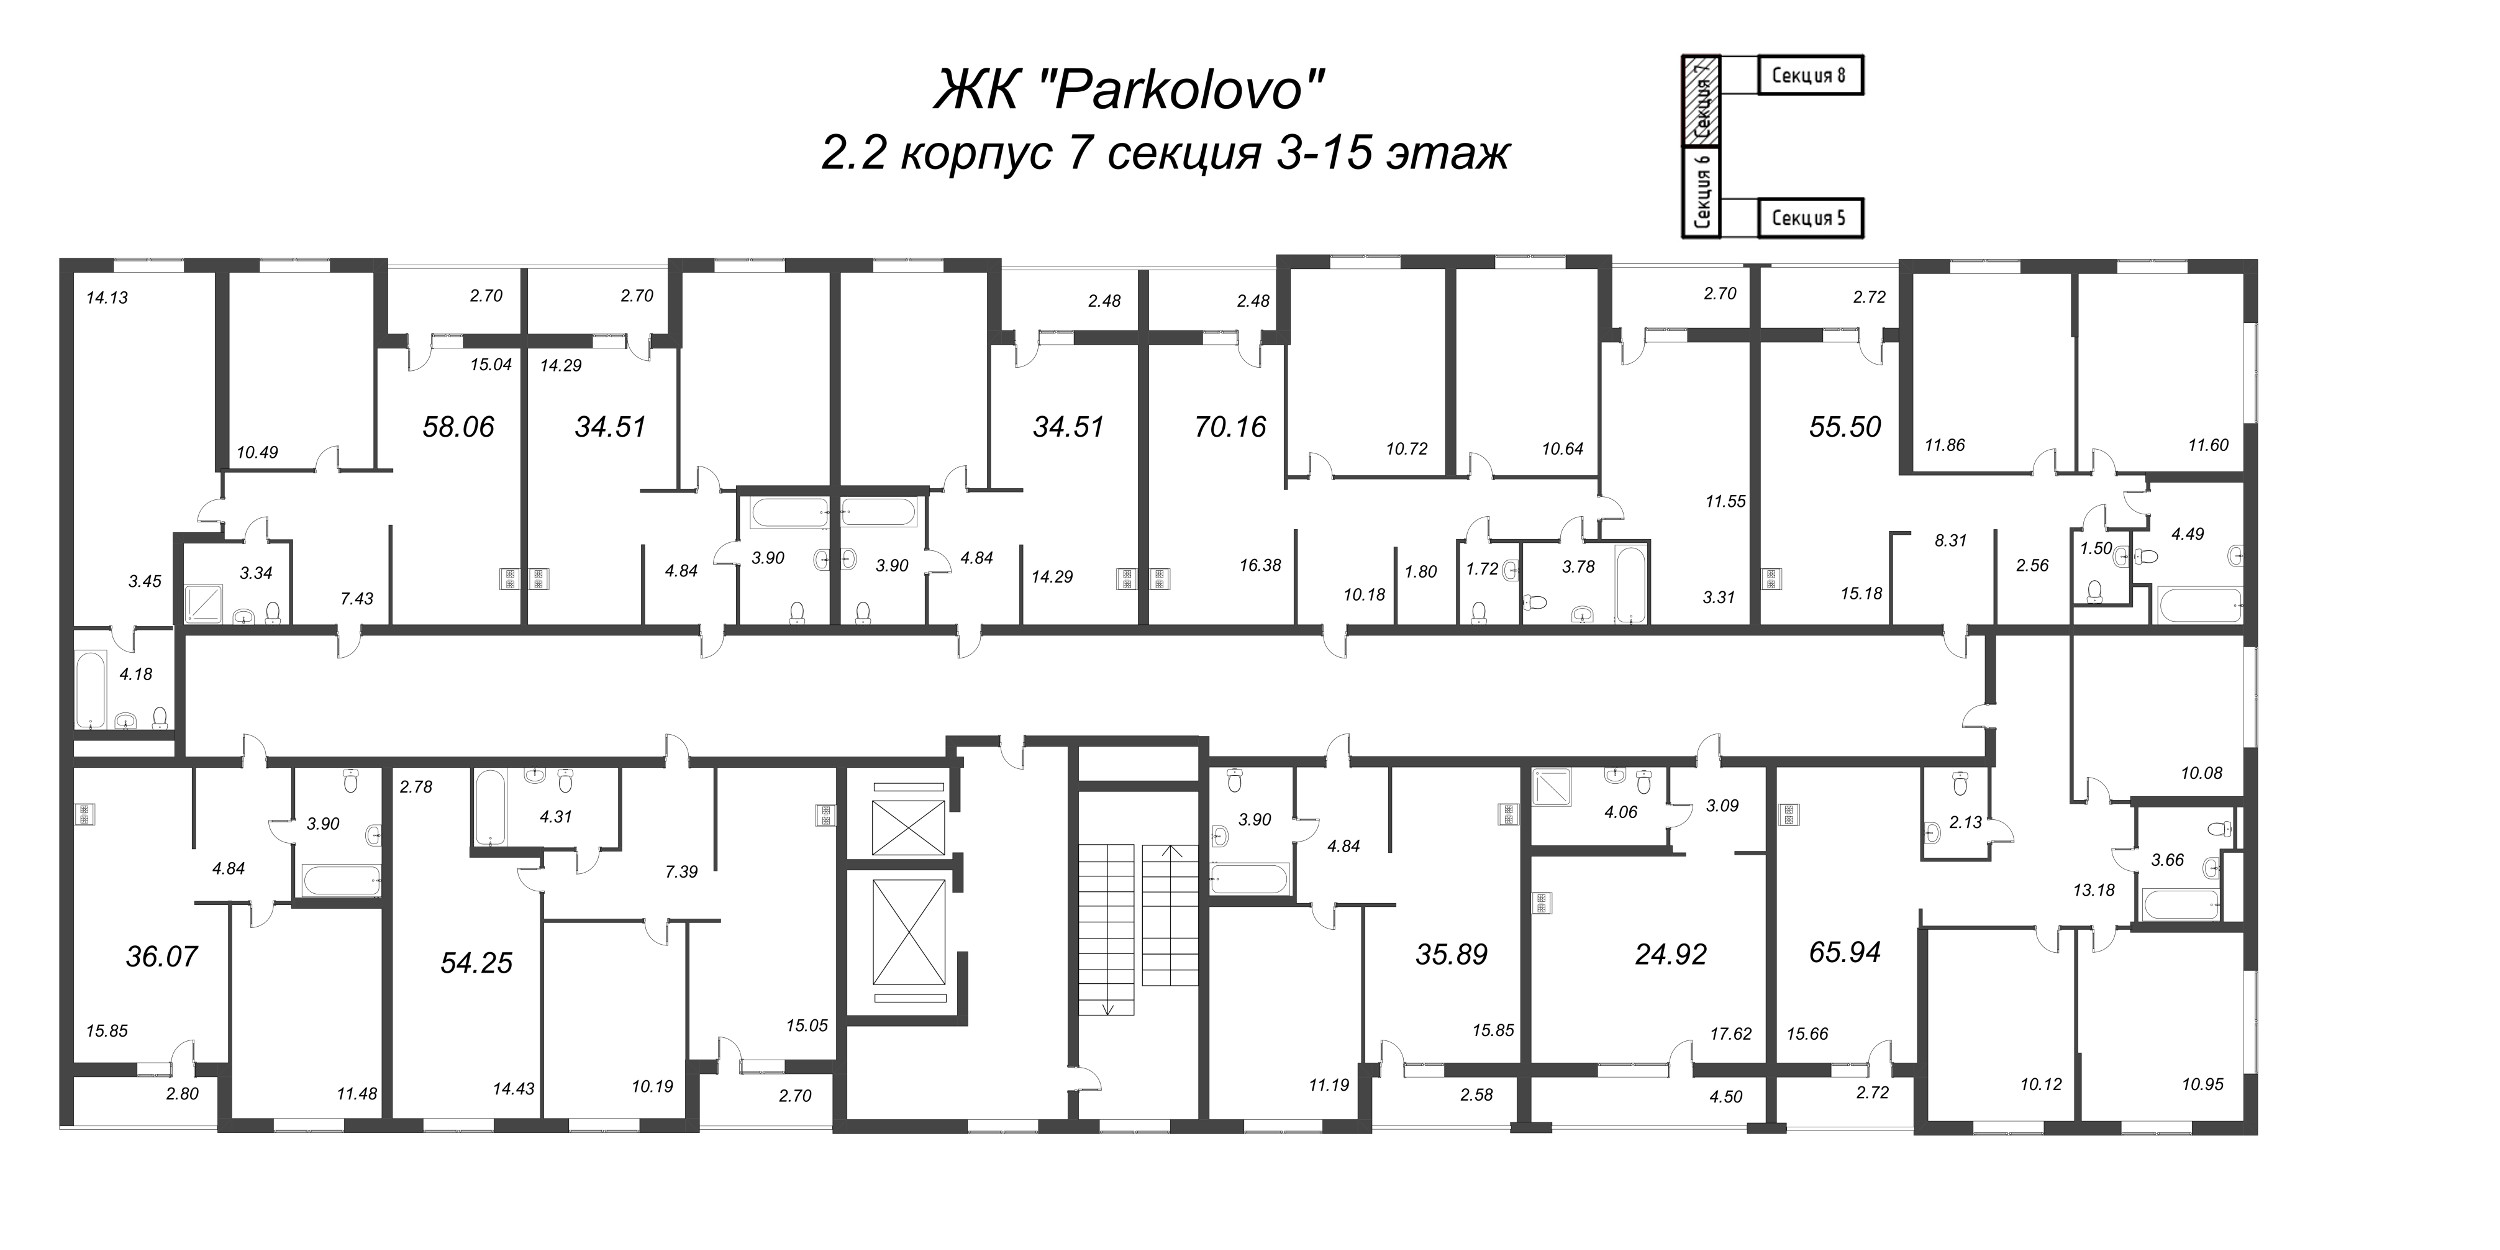 4-комнатная (Евро) квартира, 62.98 м² - планировка этажа